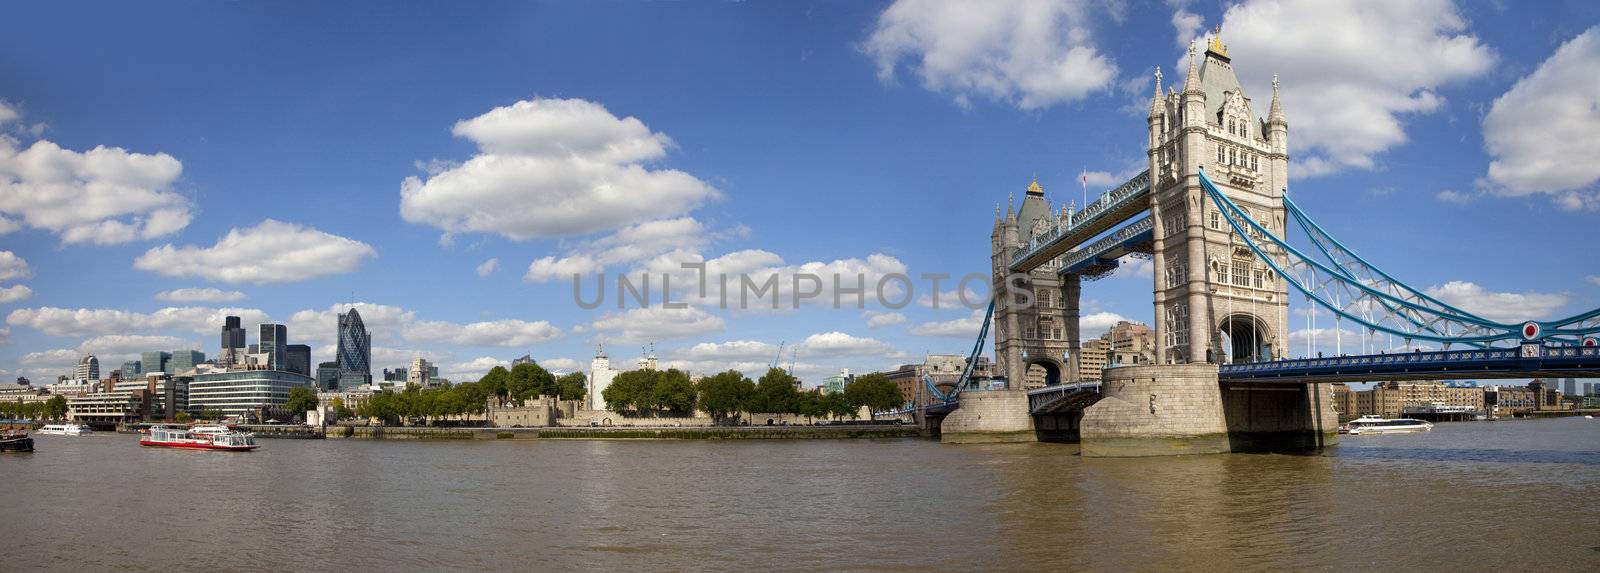 Tower Bridge and River Thames Panoramic by chrisdorney